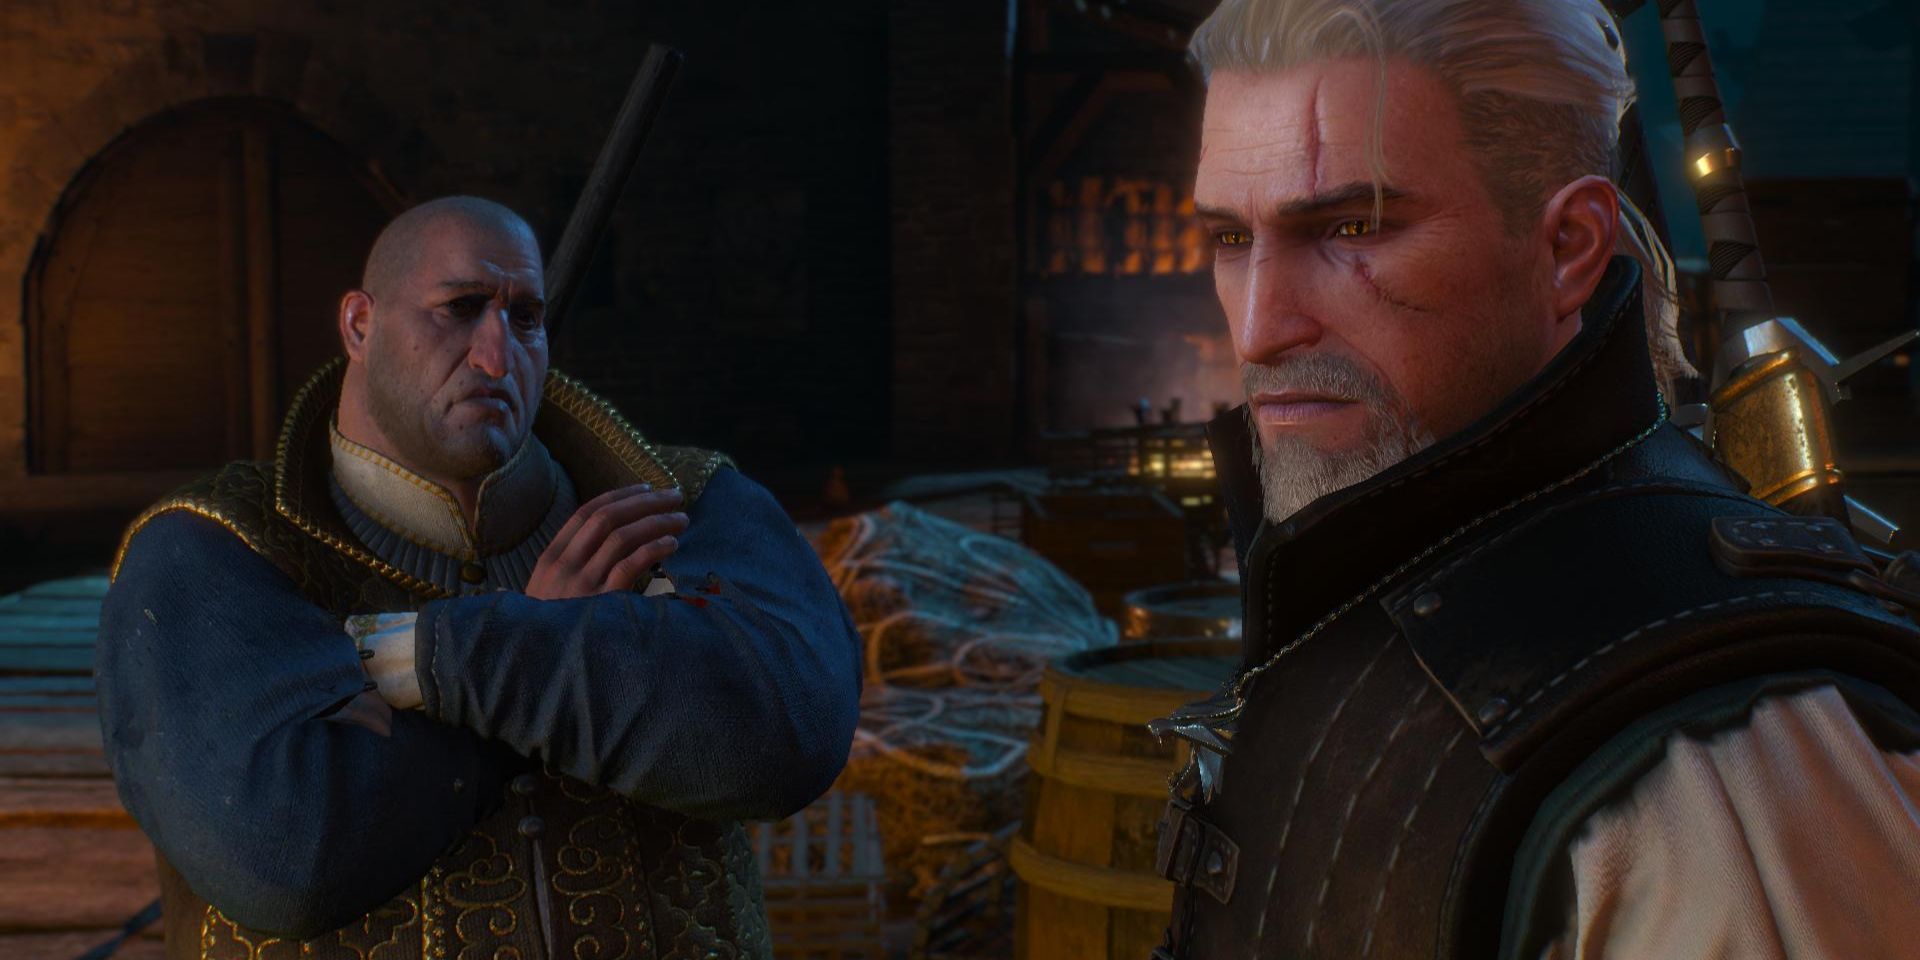 Redanian master spy Dijkstra and witcher Geralt